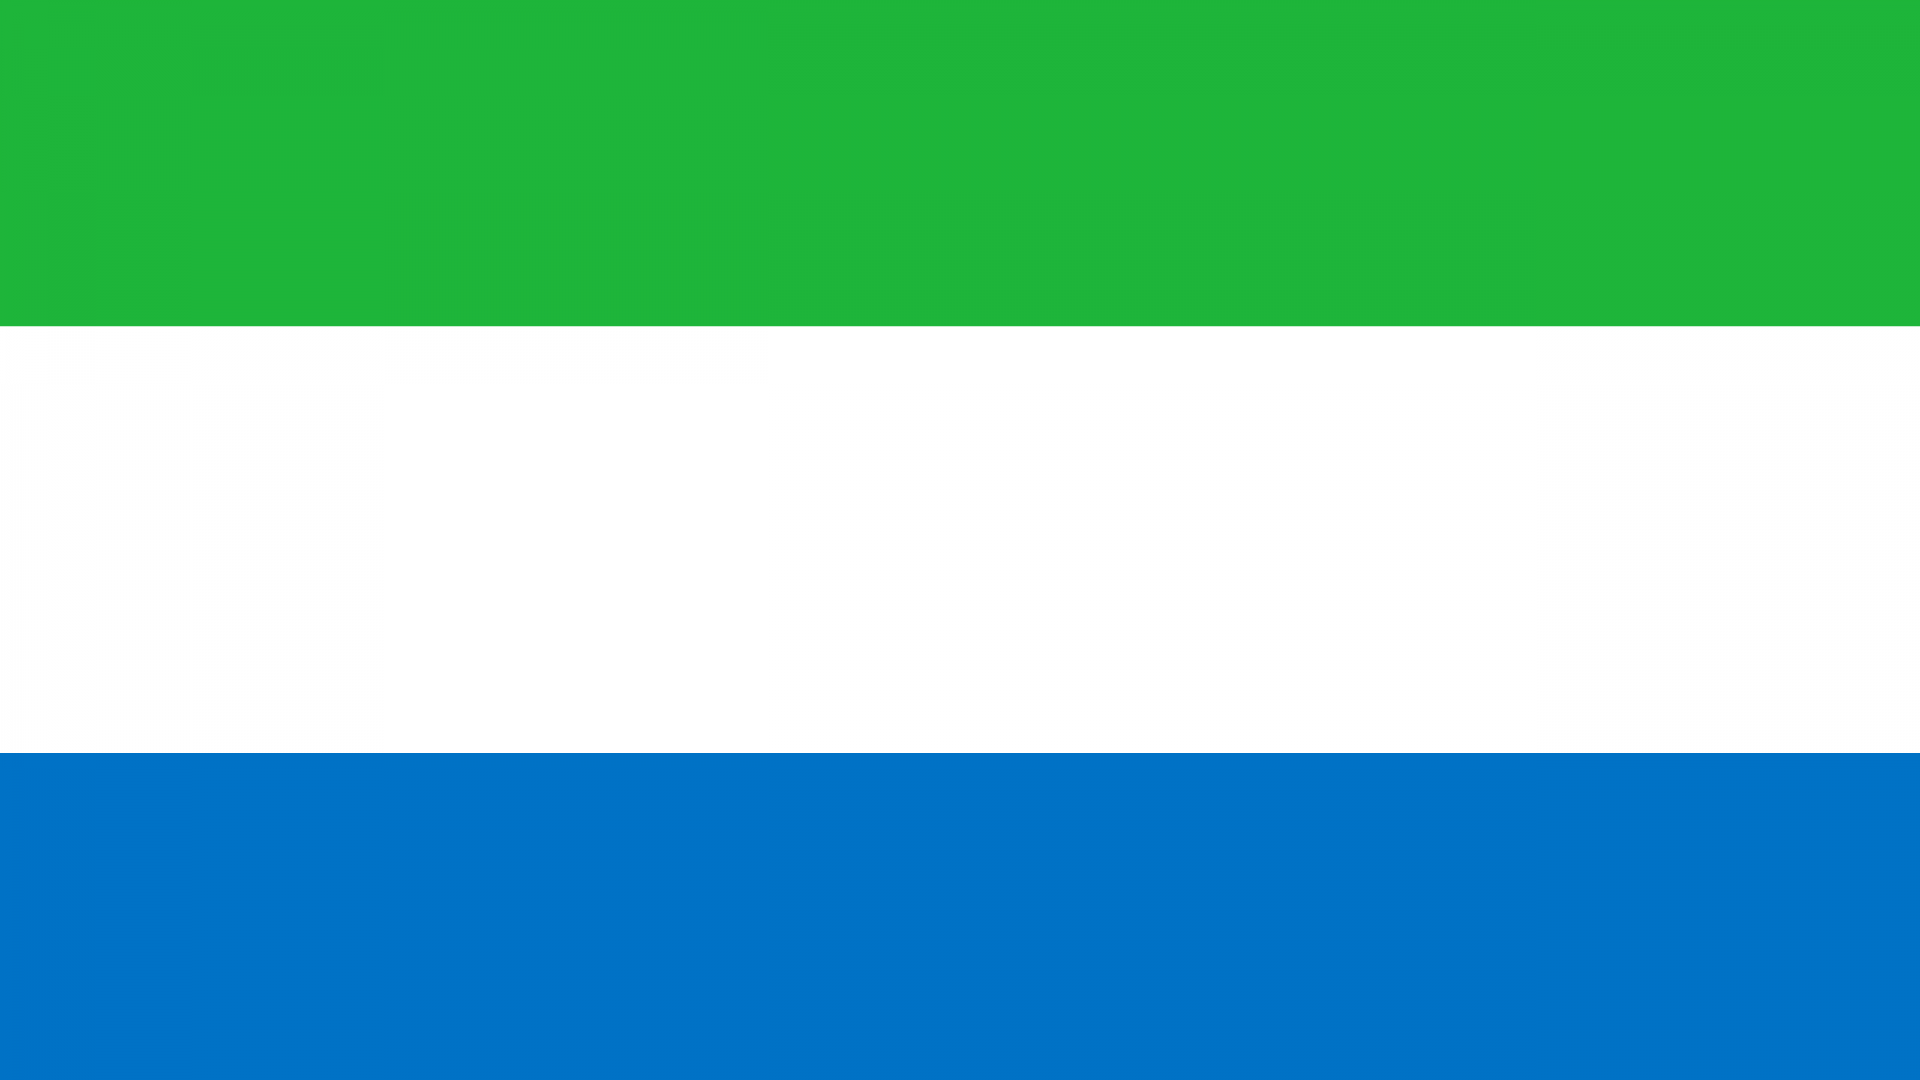 Sierra Leone Flag, High Definition, High Quality, Widescreen